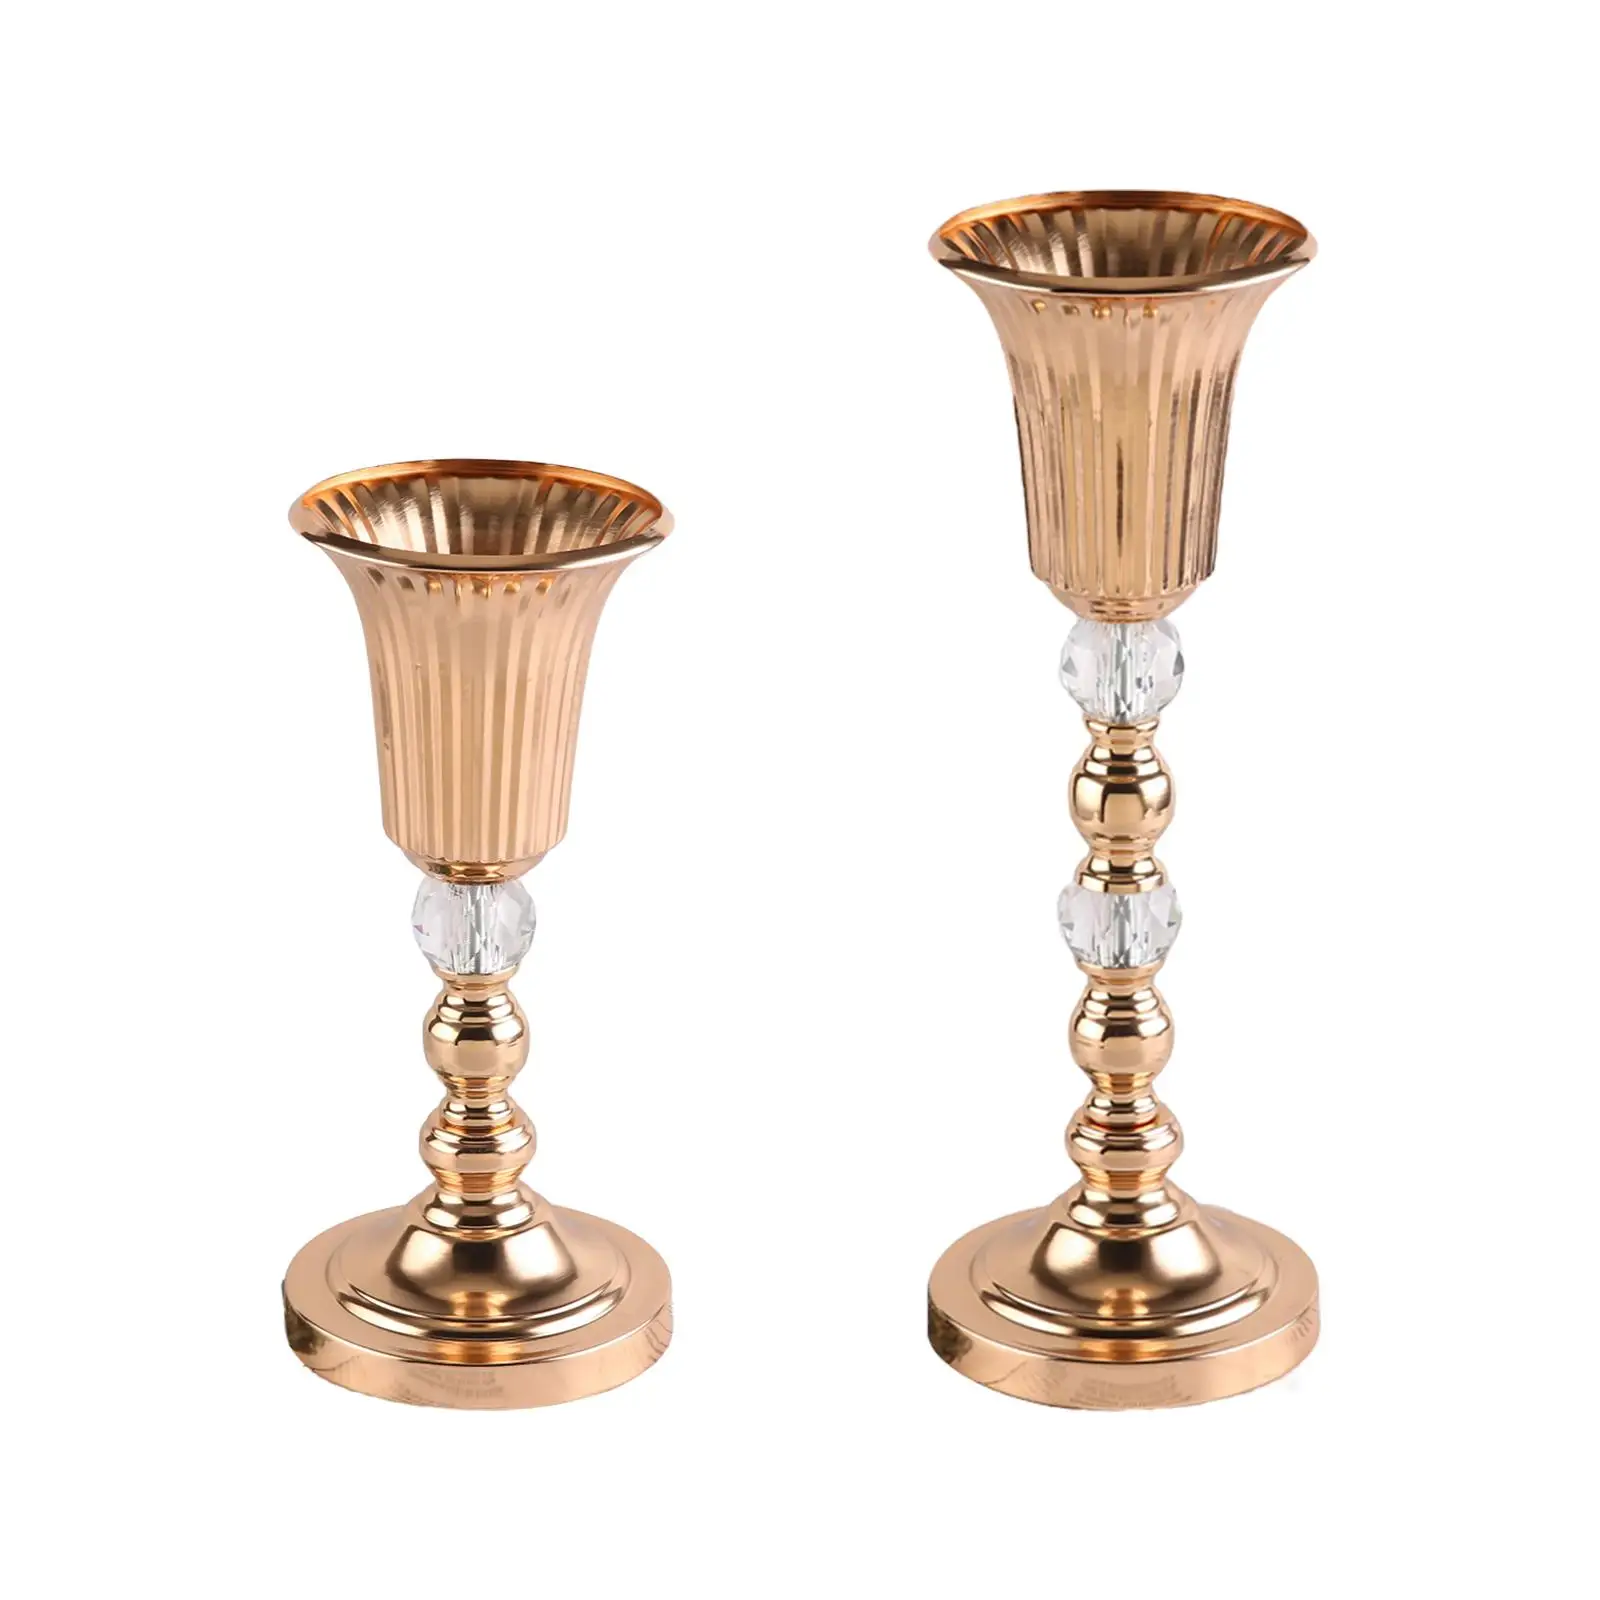 Flower Stand Centerpieces for Tables Flower Holders Elegant Versatile Metal Vase